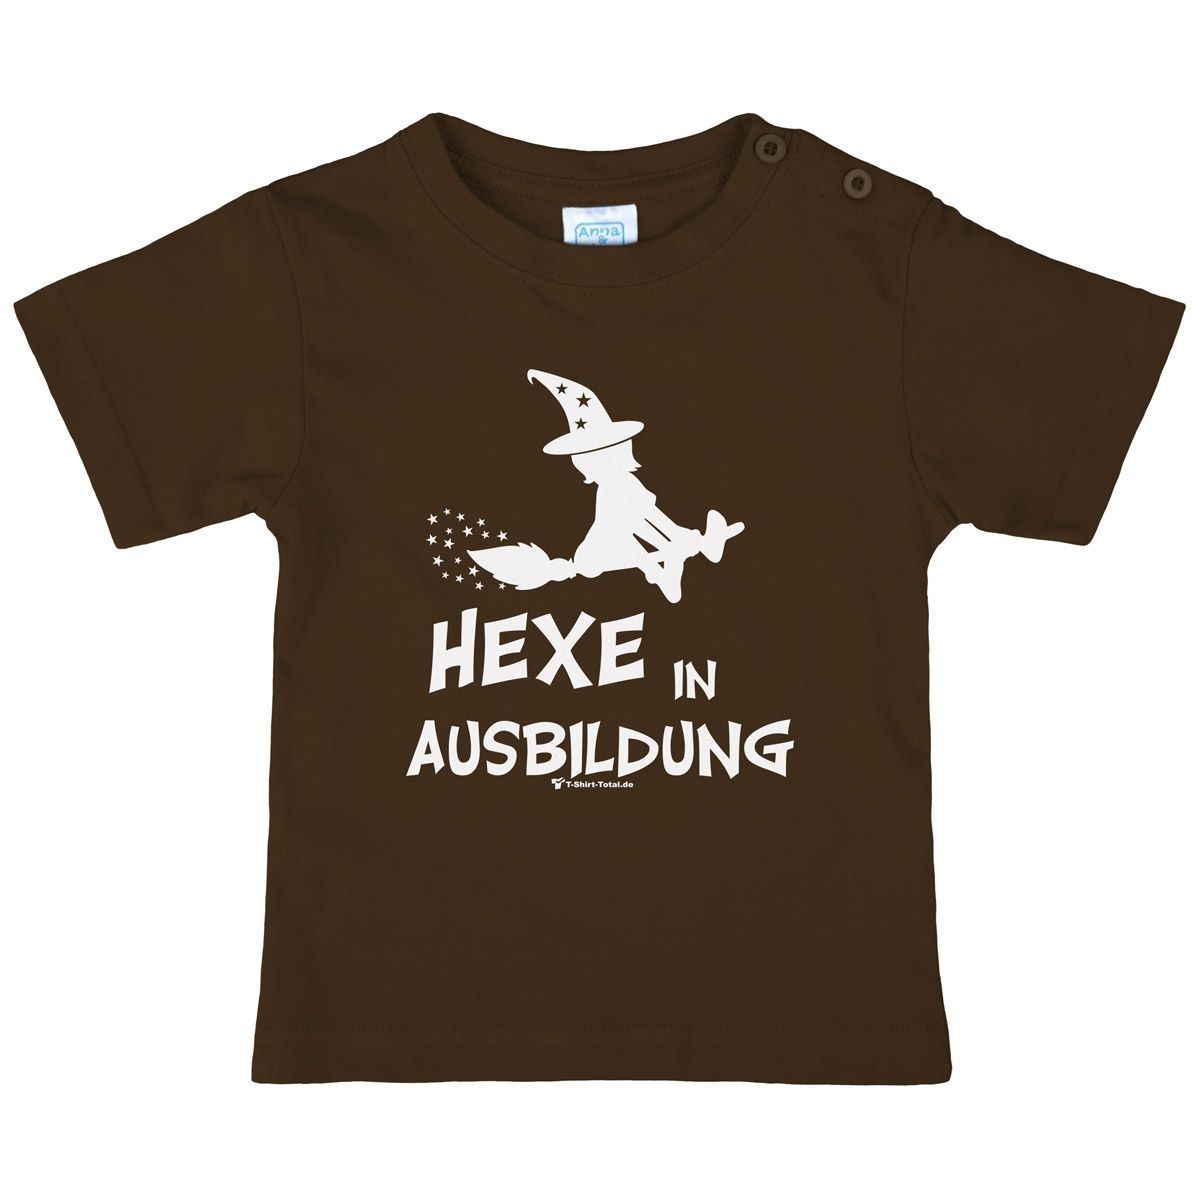 Hexe in Ausbildung Kinder T-Shirt braun 110 / 116